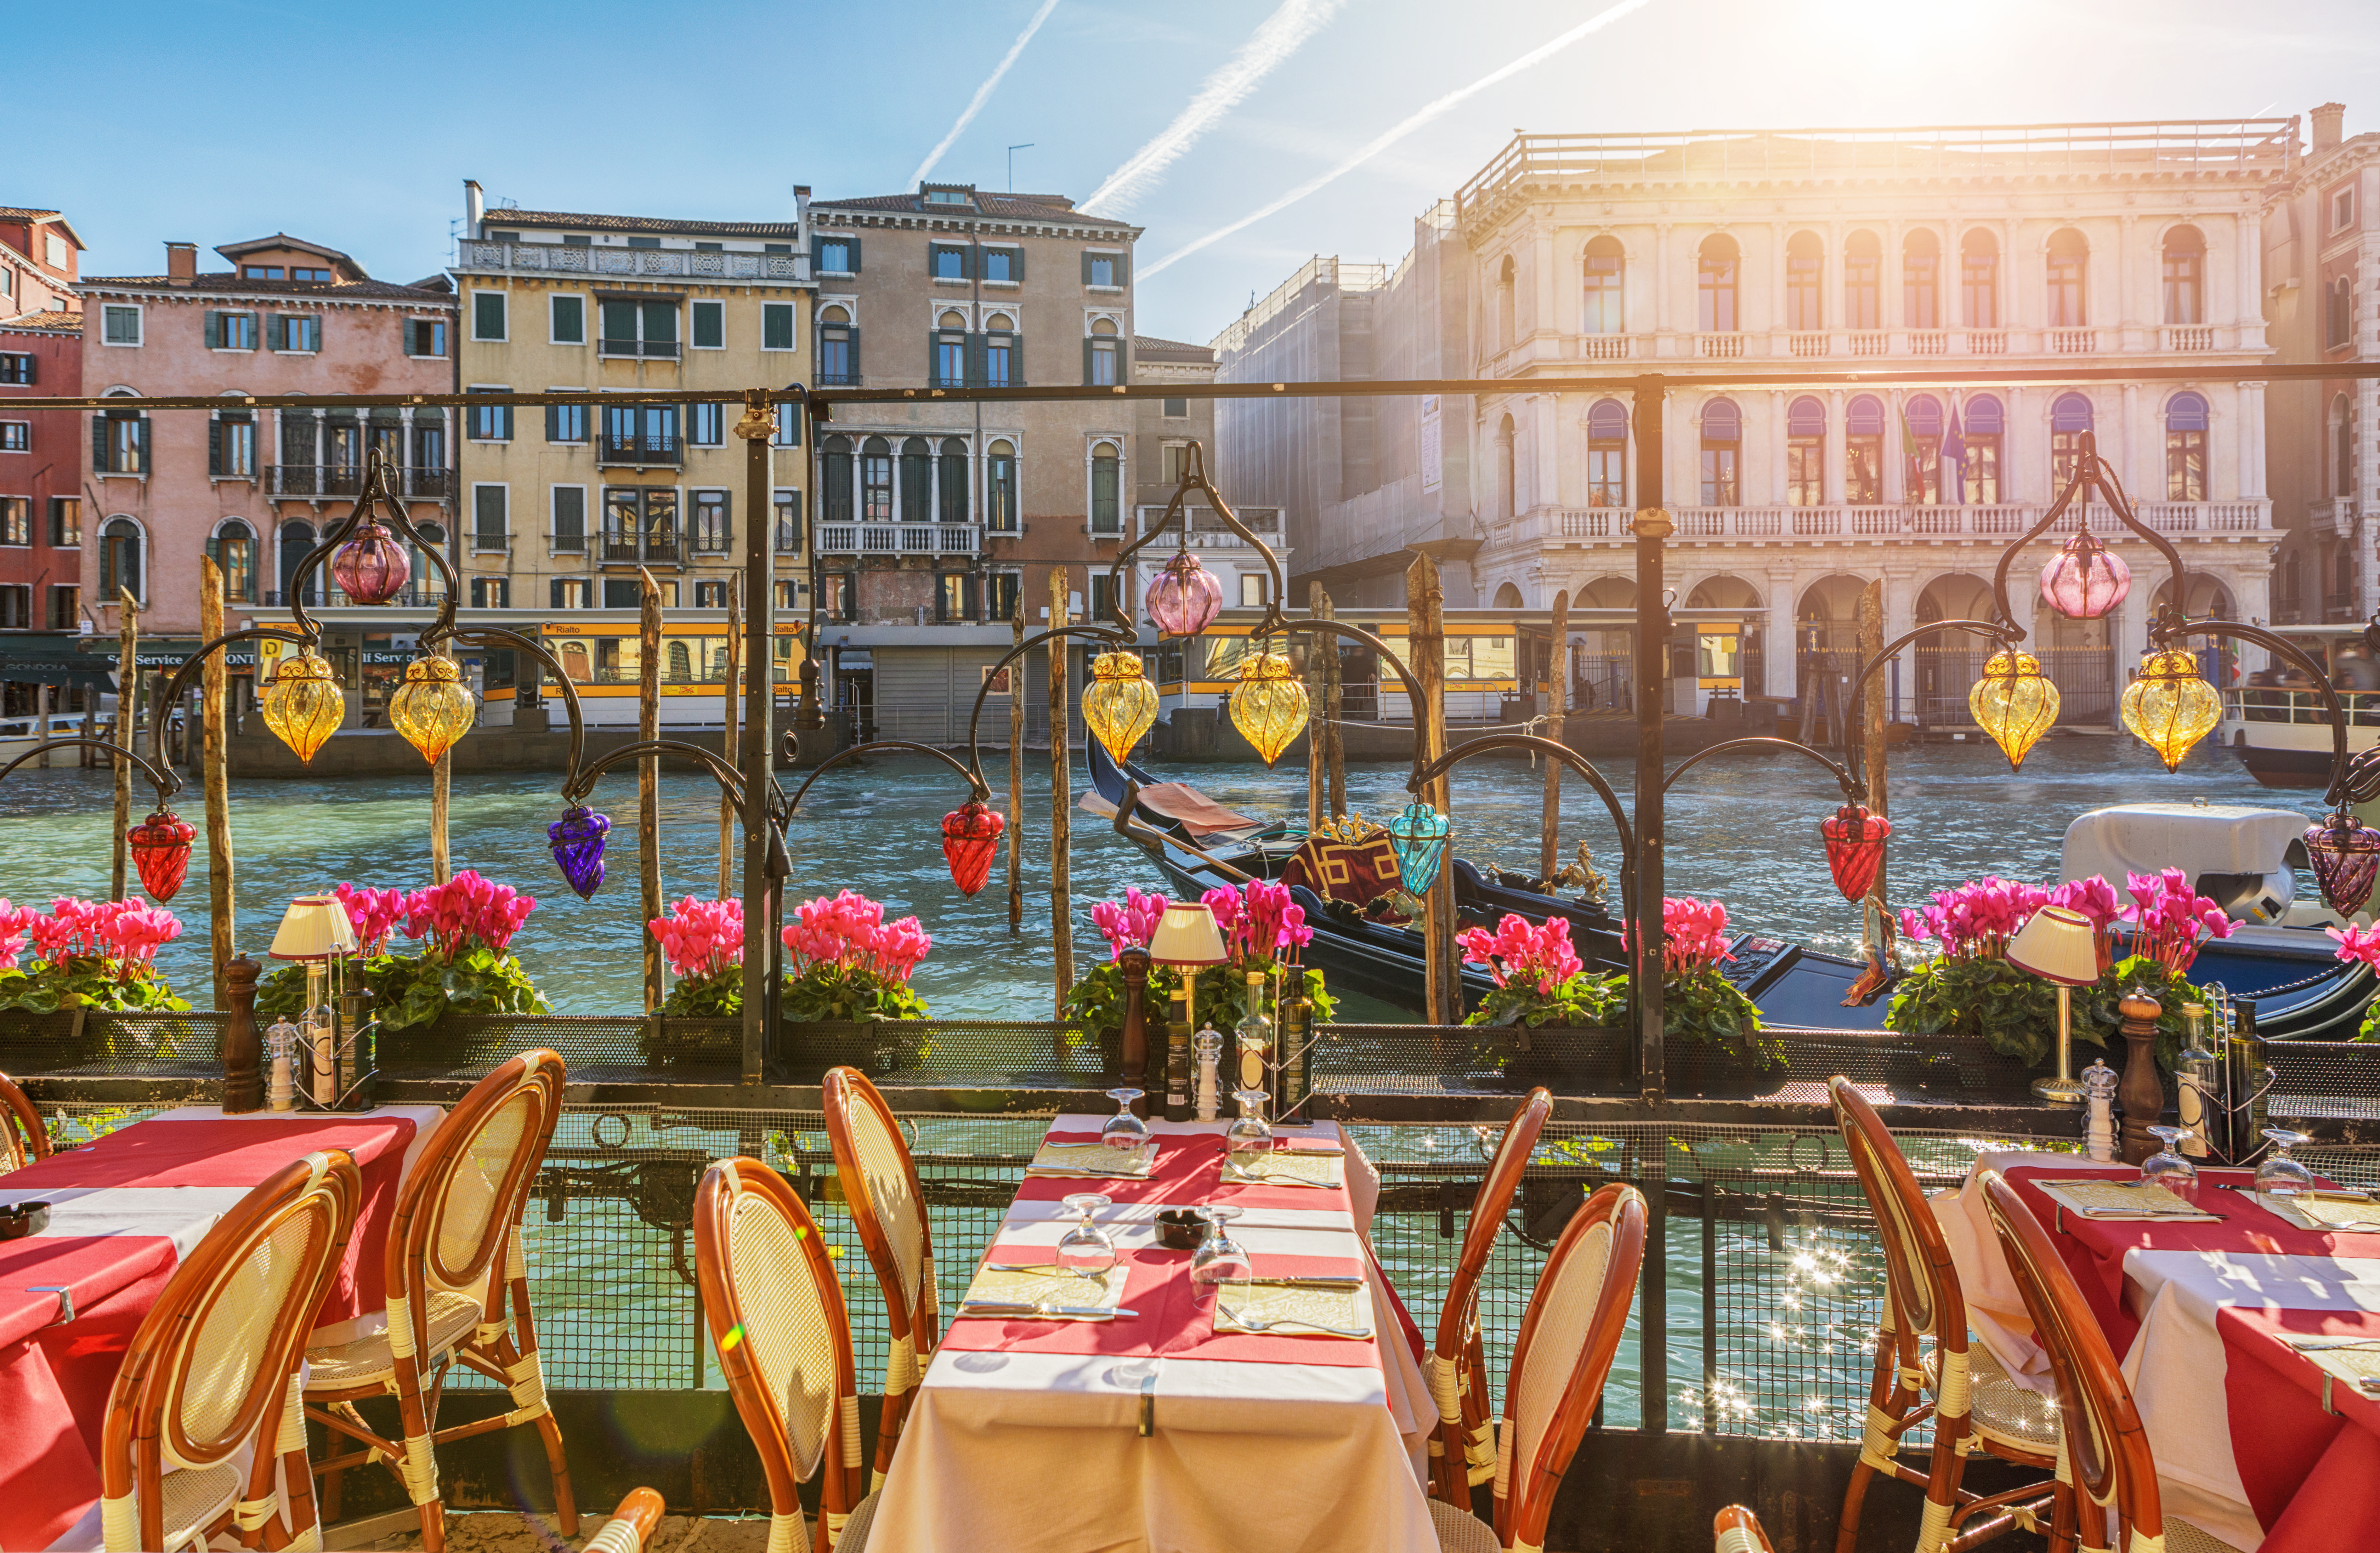 Restaurant Tables Near The Canal of Venice, Italy